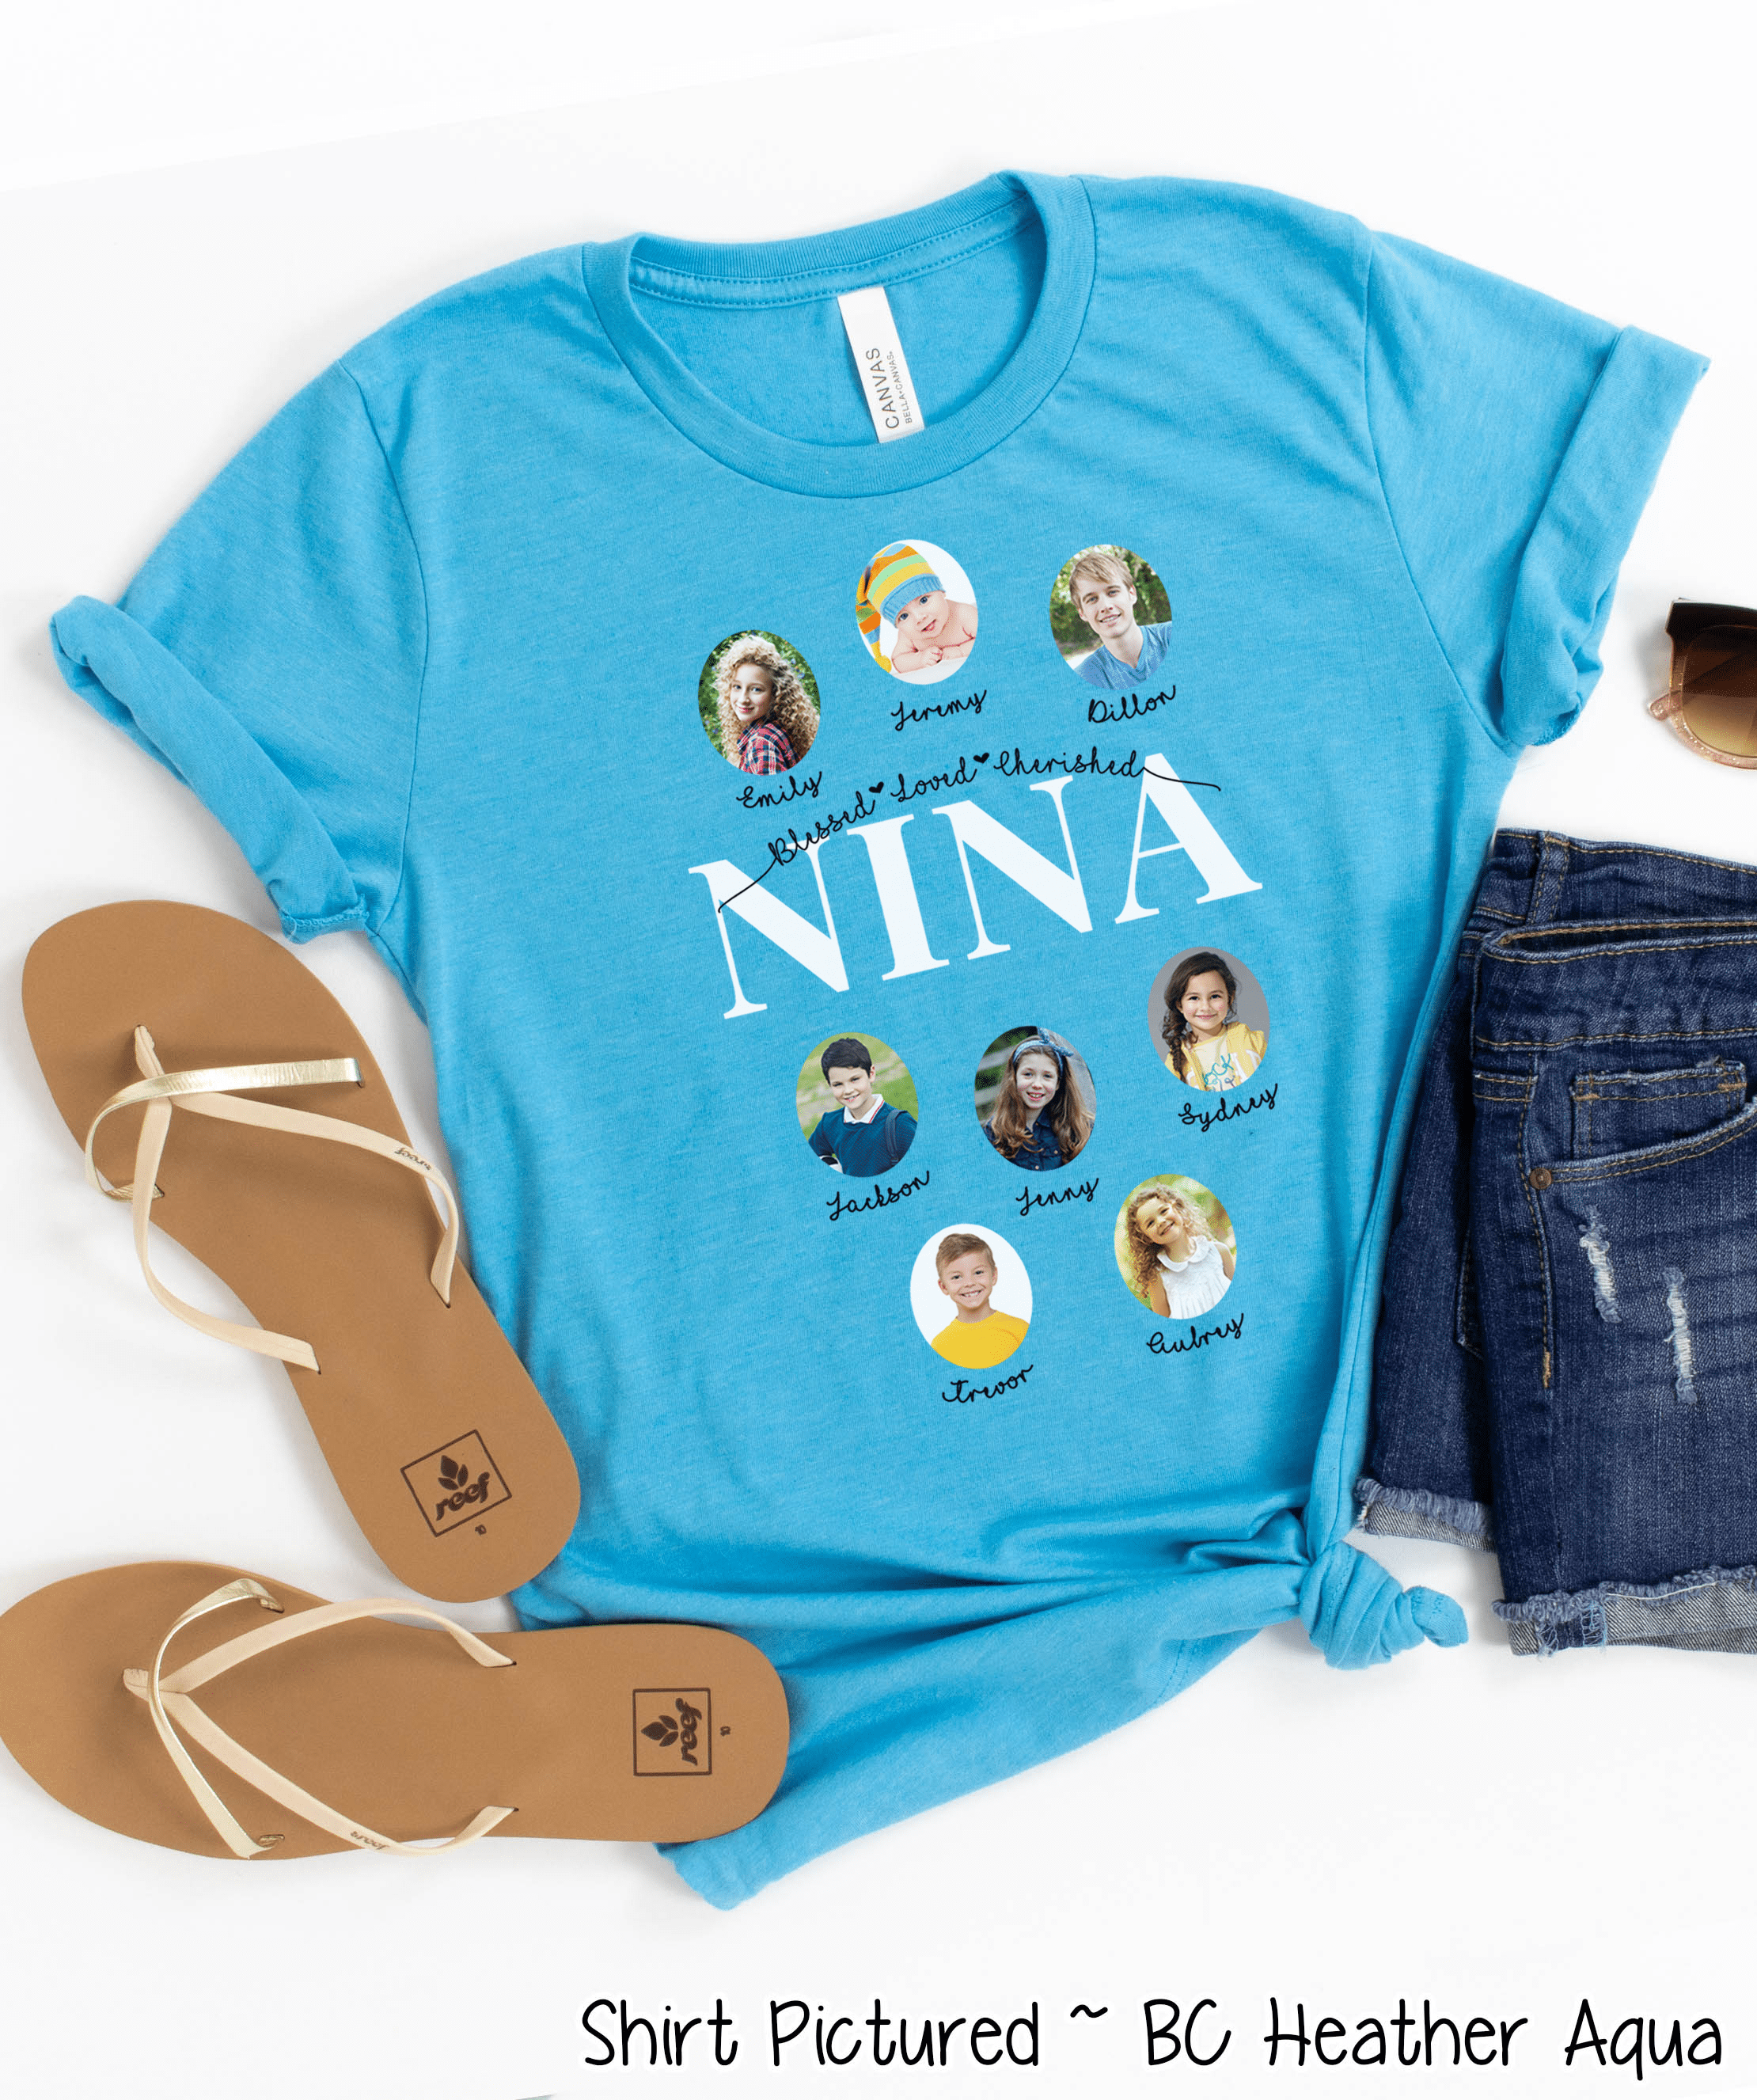 Personalized Nina Photo Shirt ~ Individual Grandkids Photos & Names